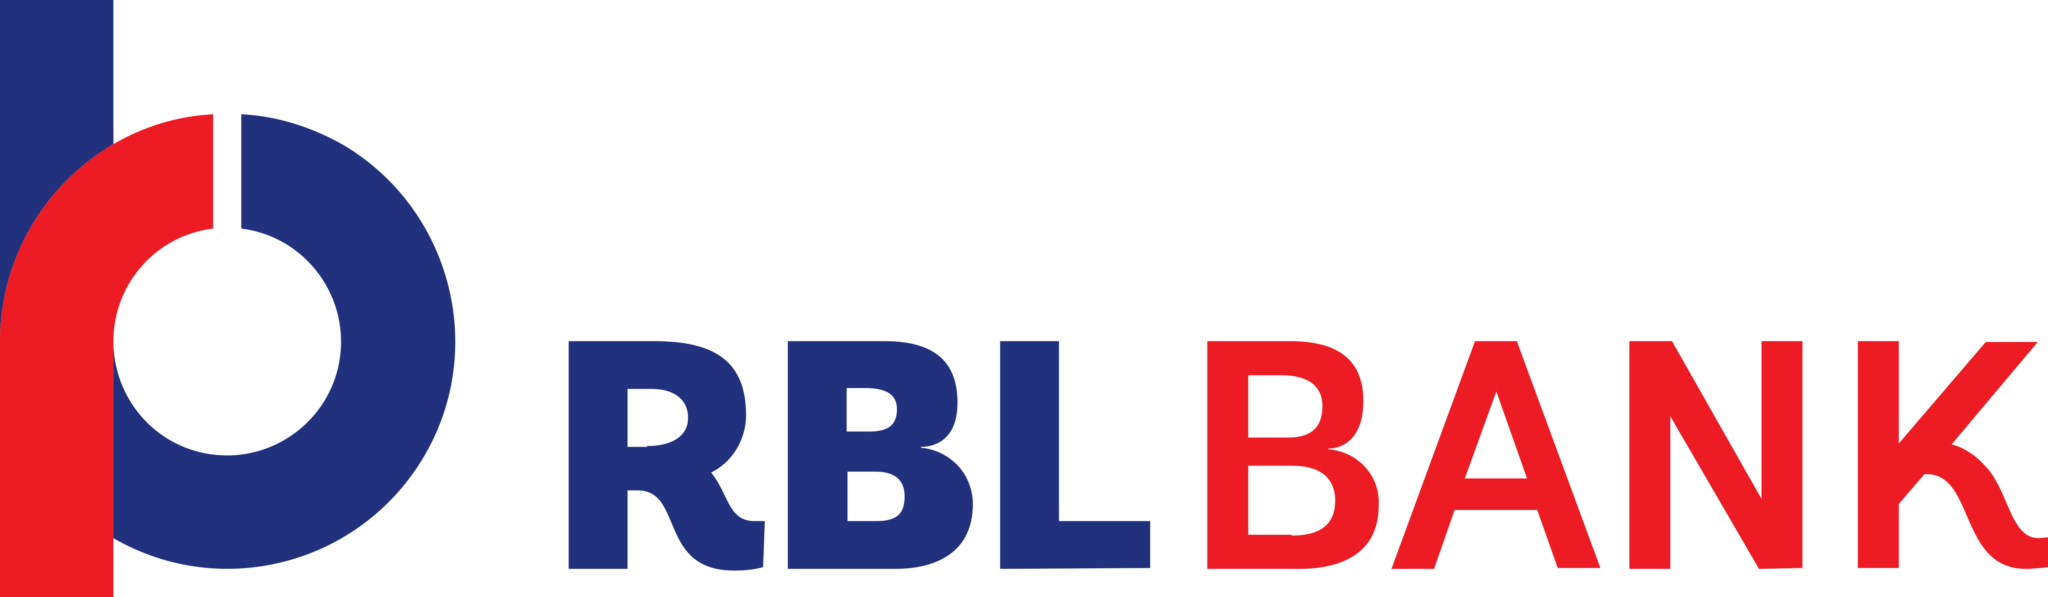 RBL Bank. Банки эмблемы. Банк лого. ББР банк логотип. Банки логотипы png